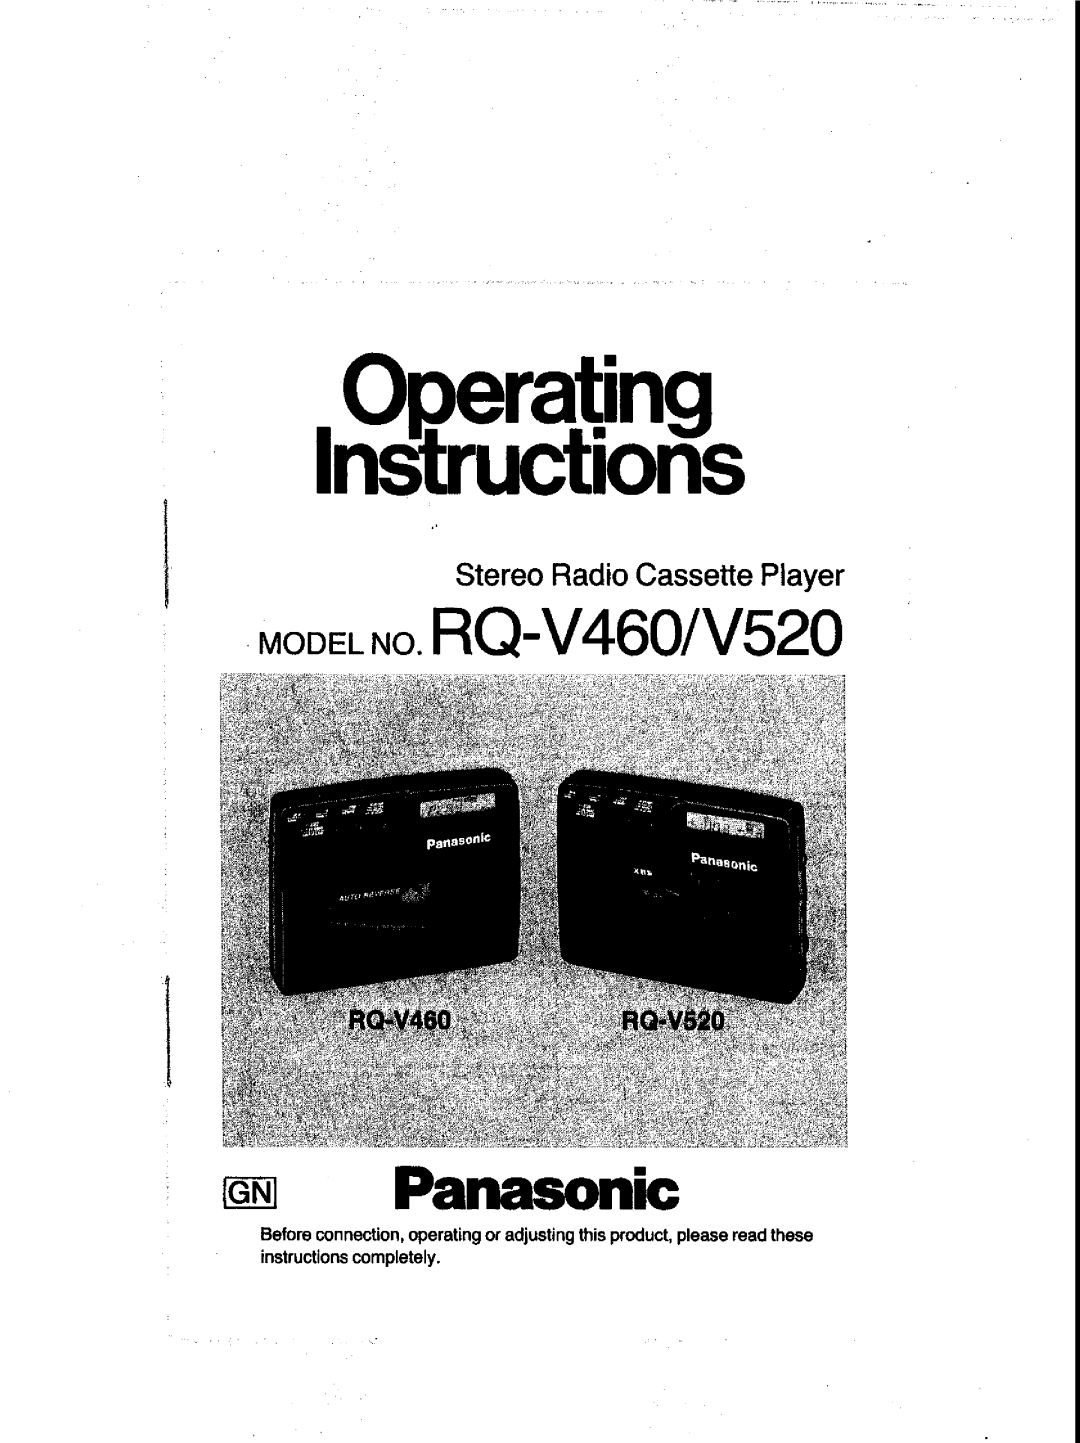 Panasonic RQ-V520, RQ-V460 manual 